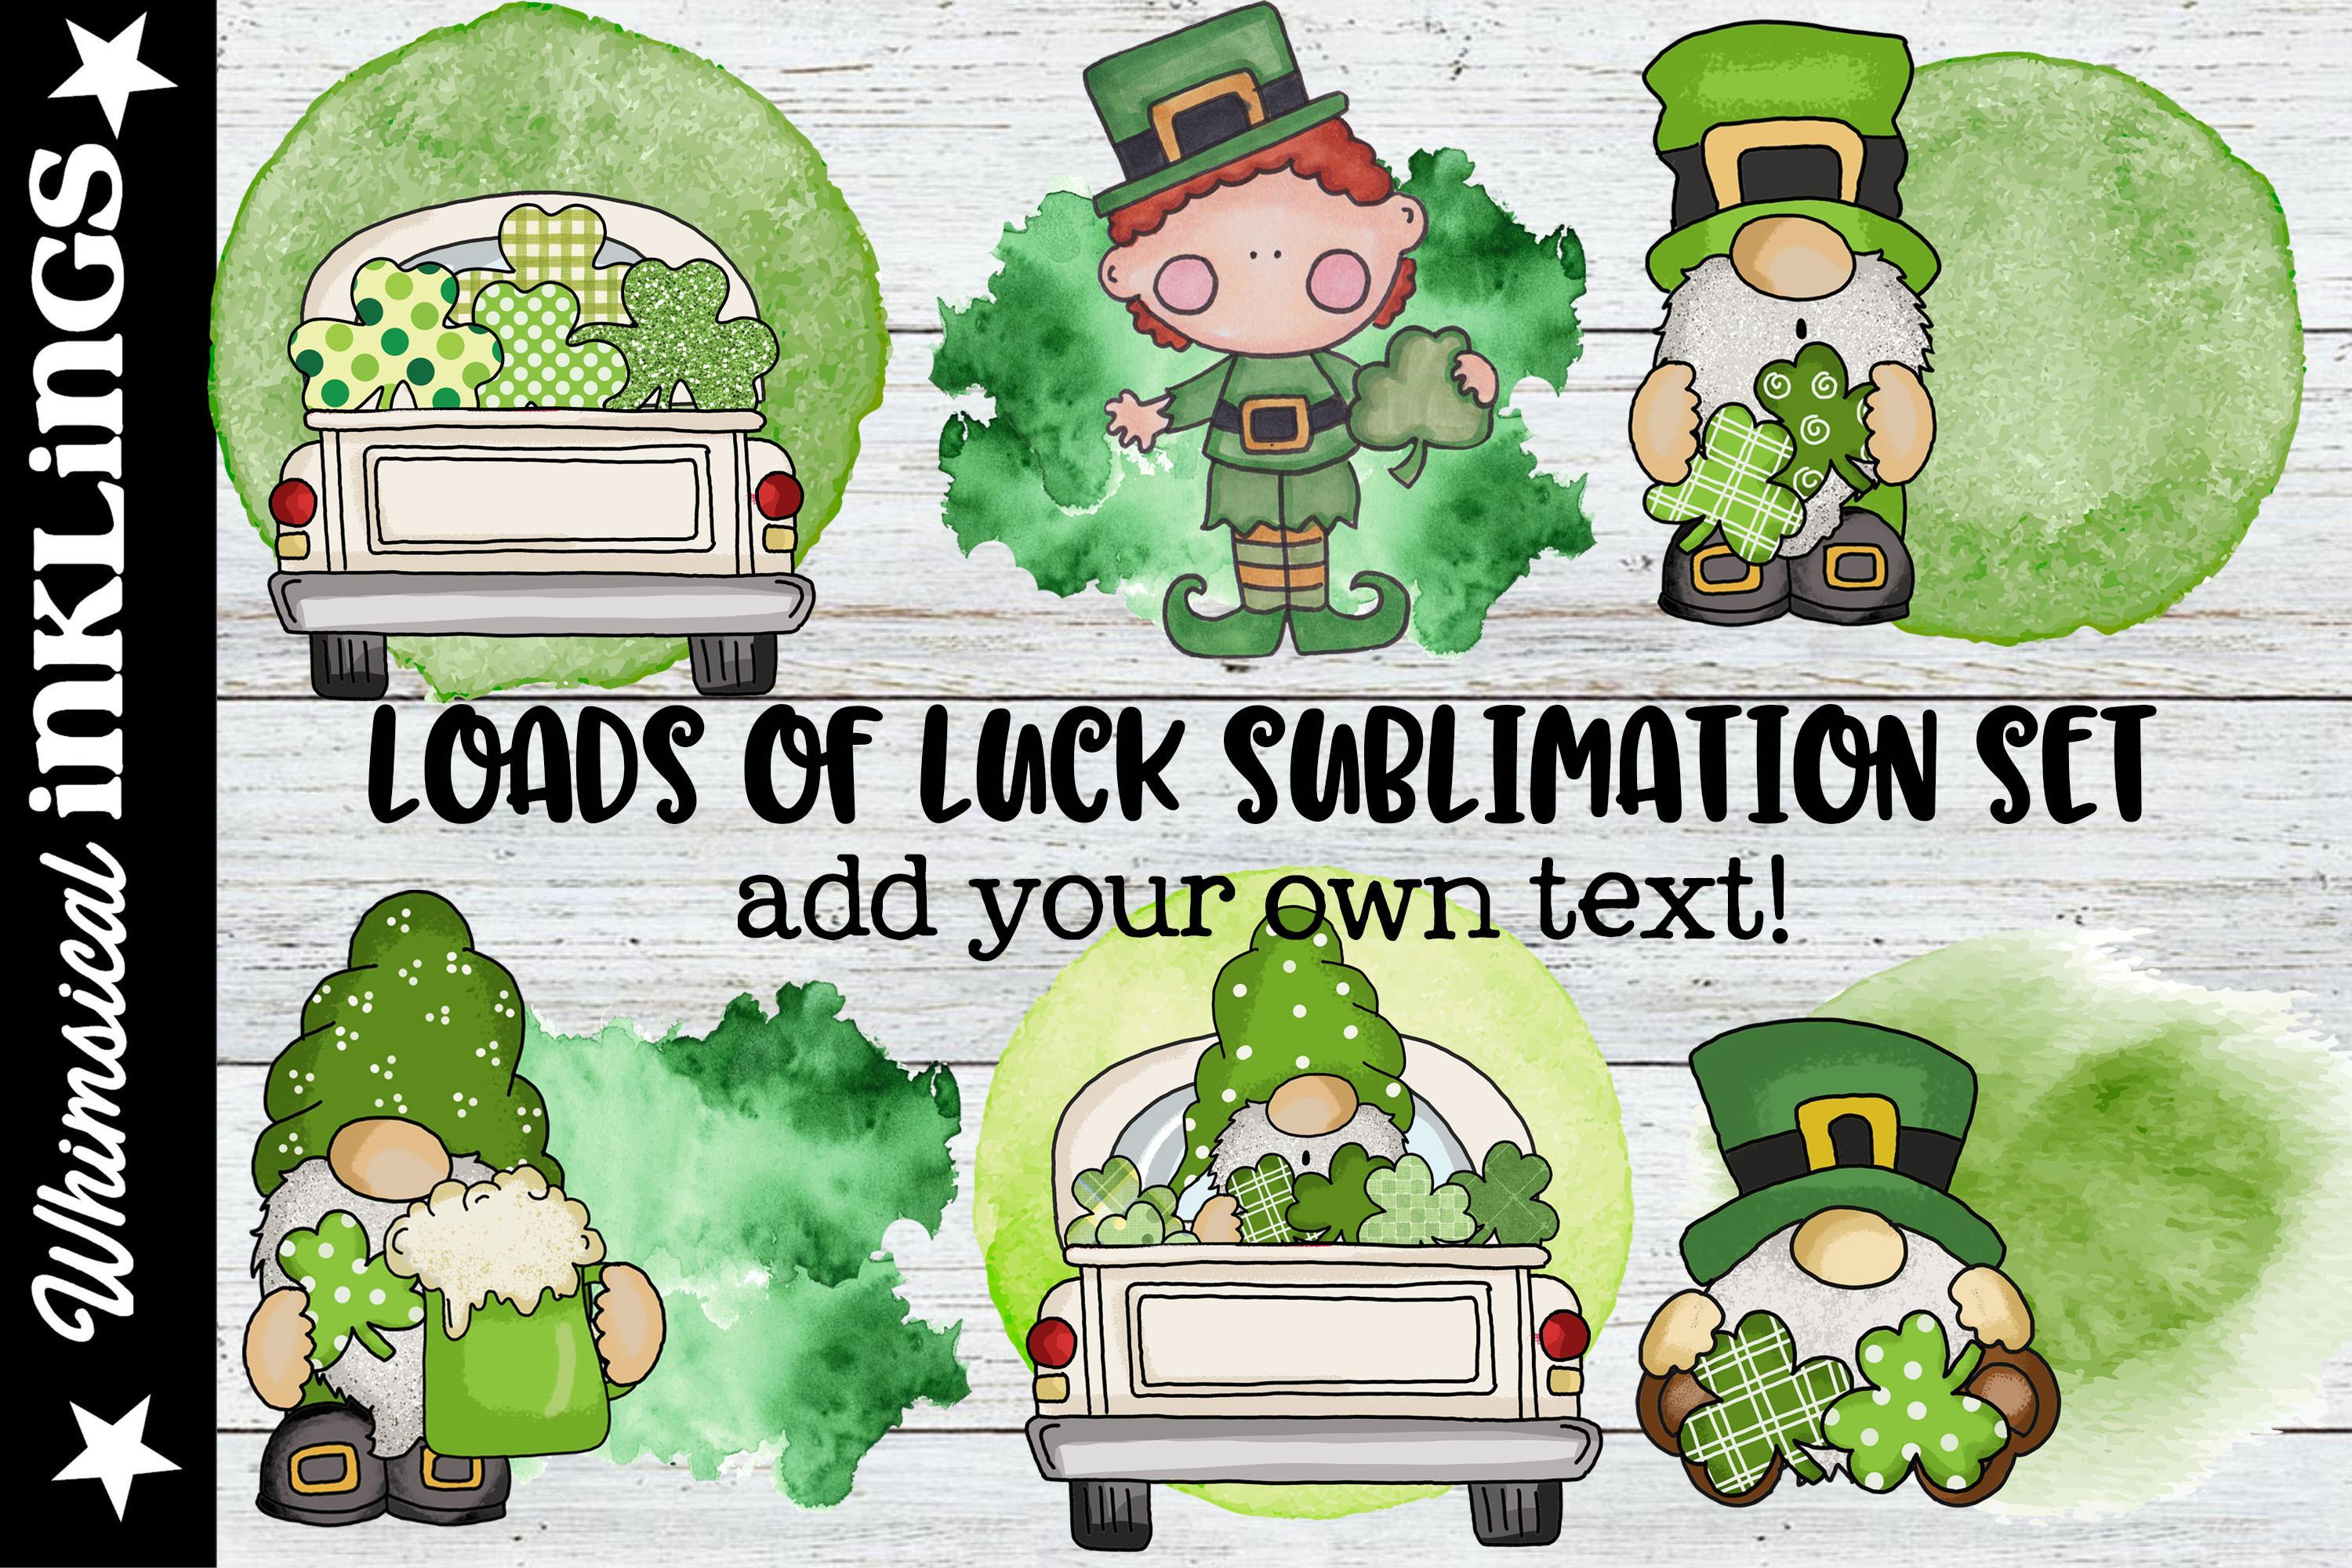 Loads of Luck Sublimation Set